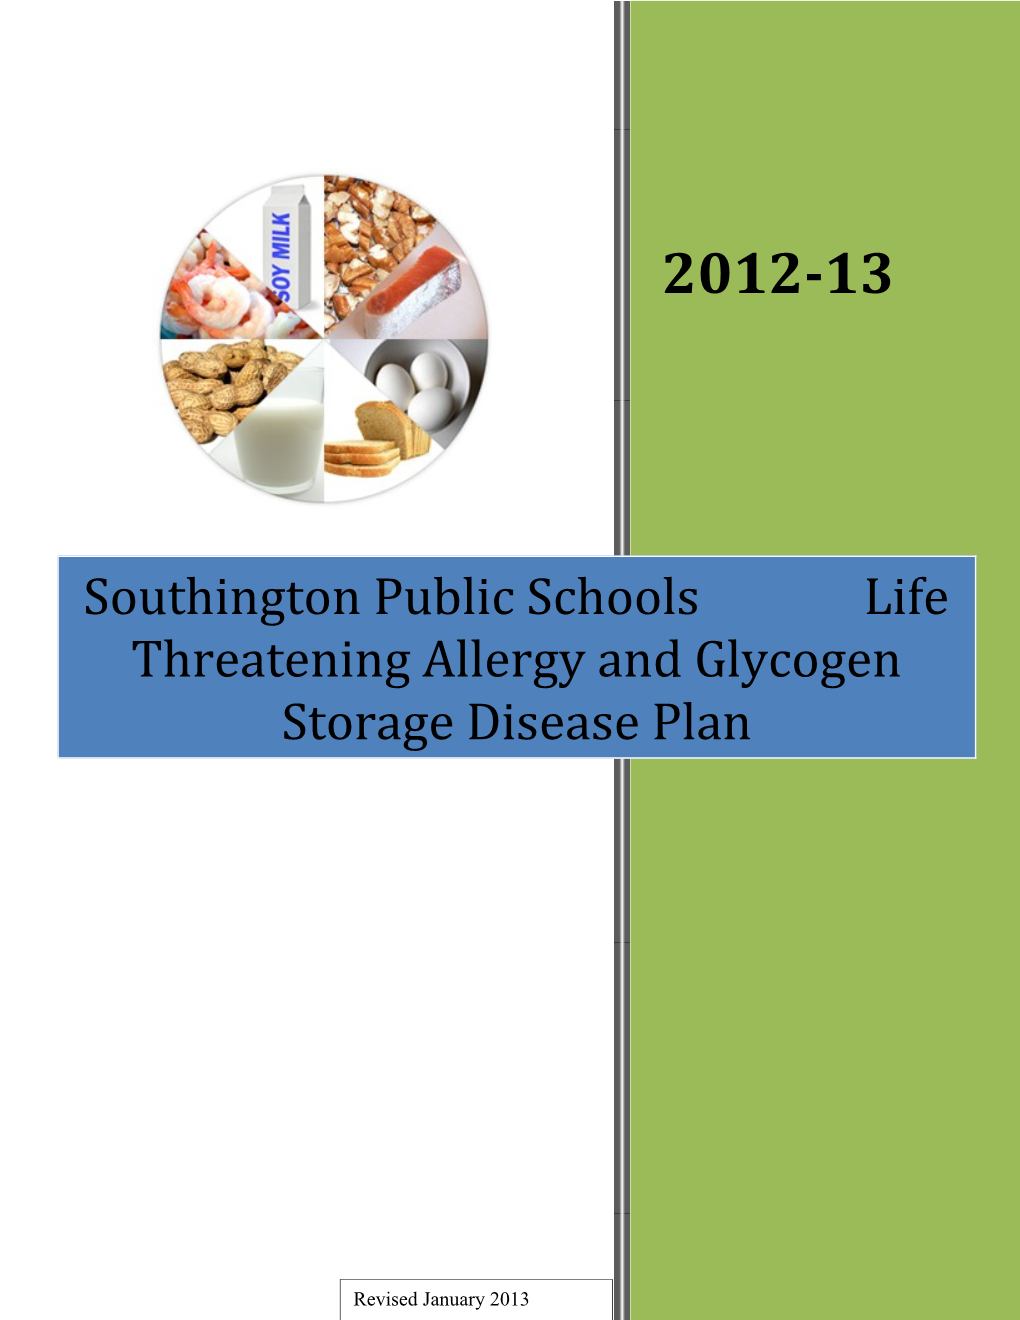 Southington Public Schools Life Threatening Allergy and Glycogen Storage Disease Plan